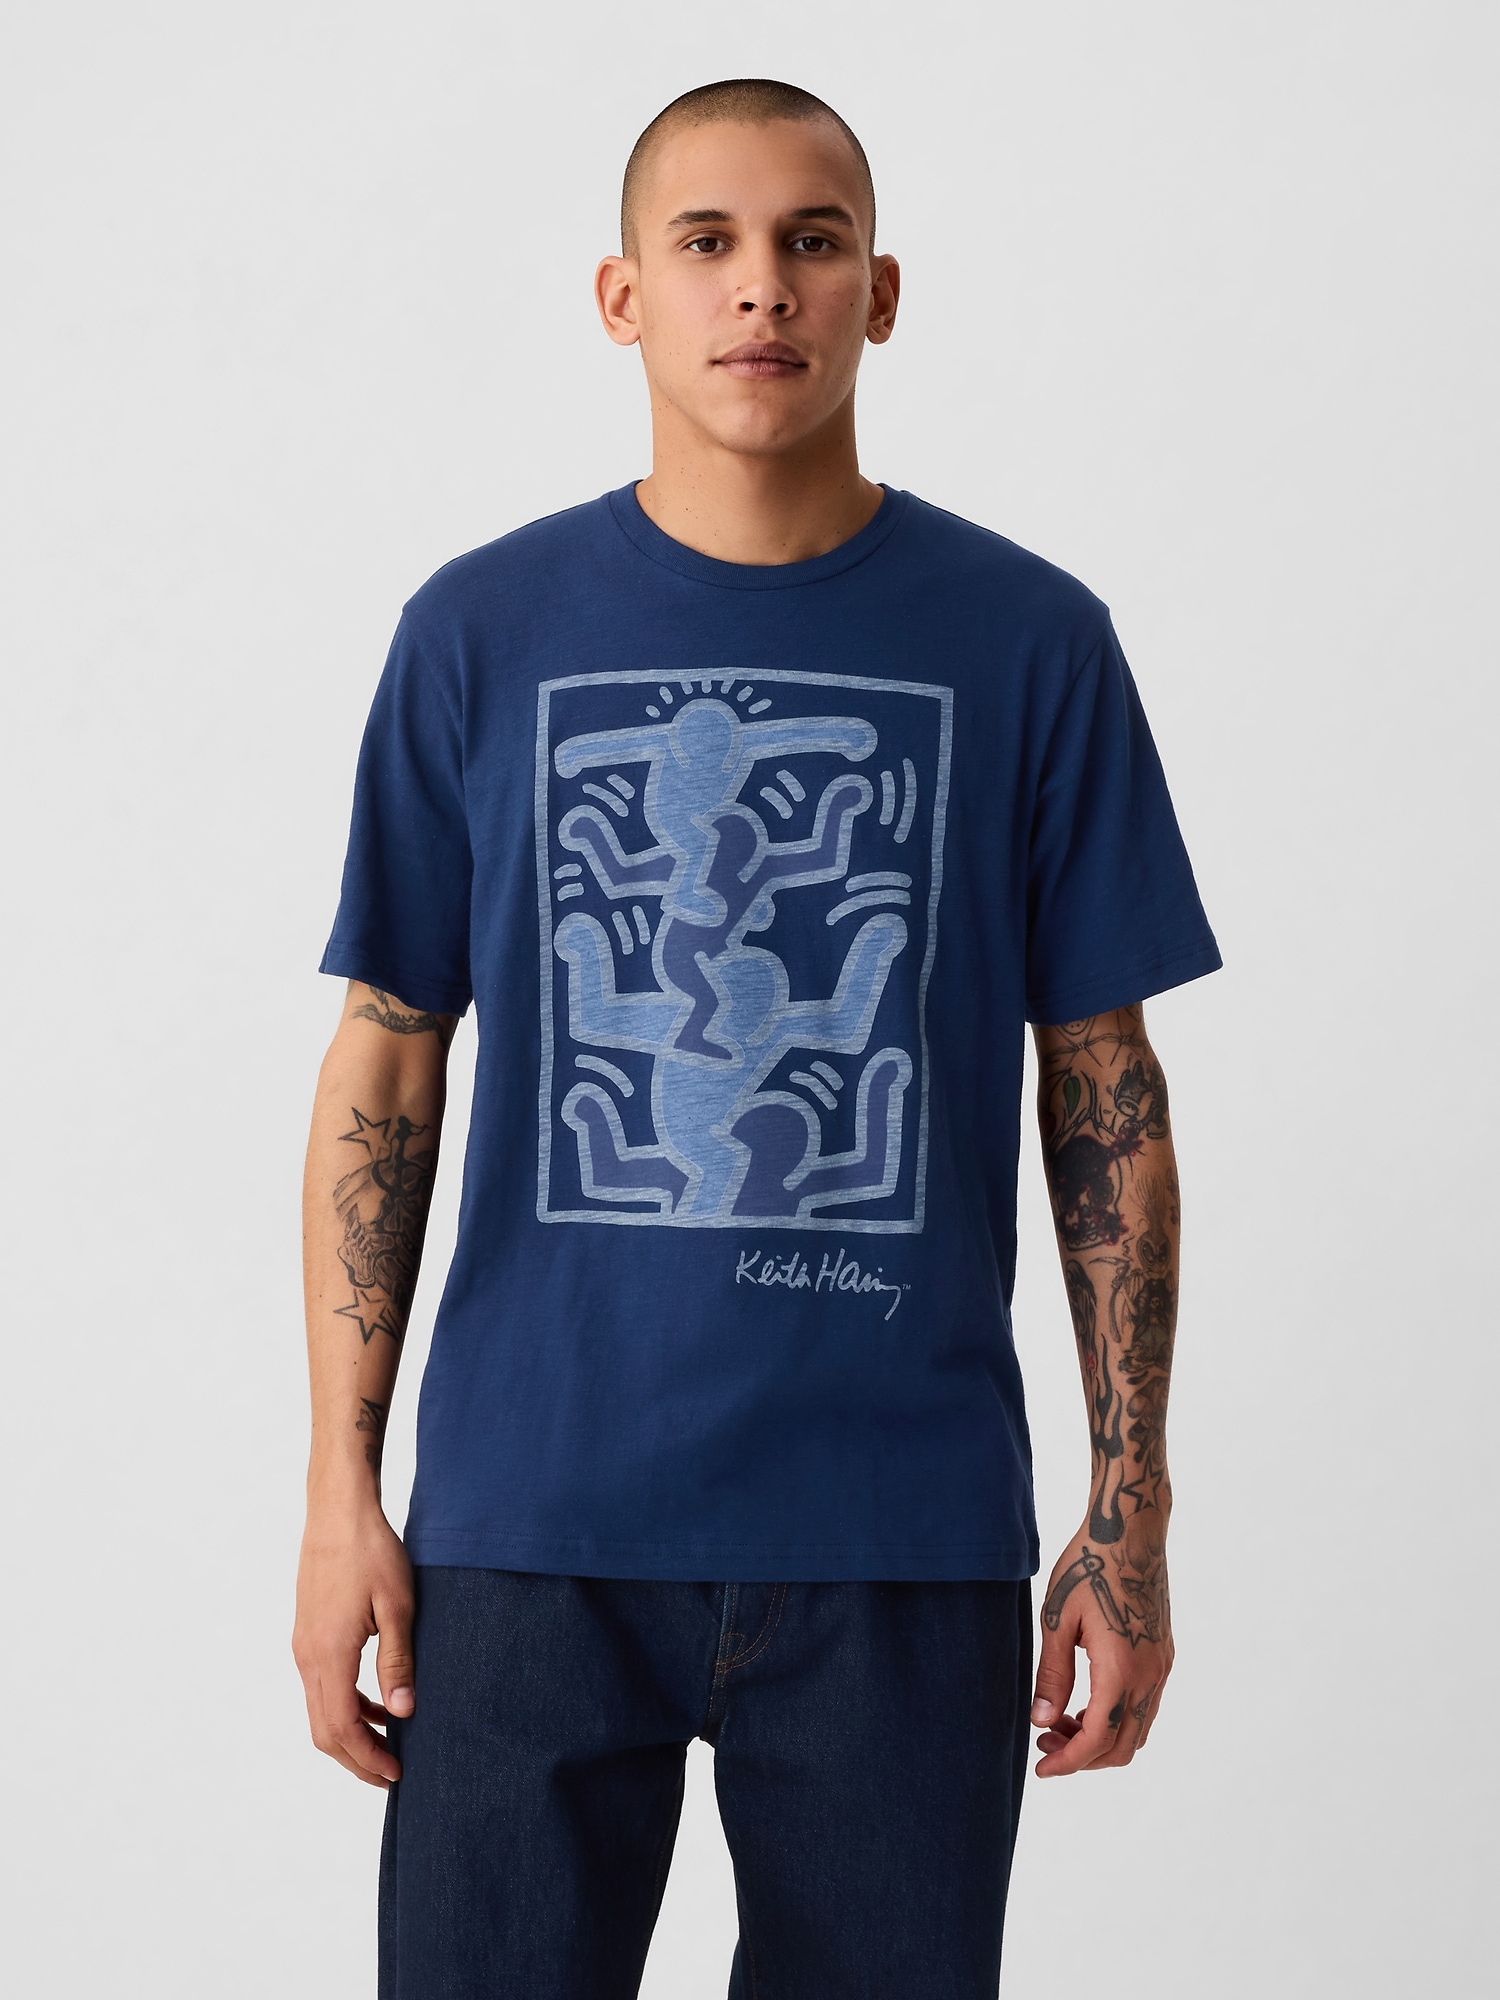 Keith Haring Graphic T-Shirt